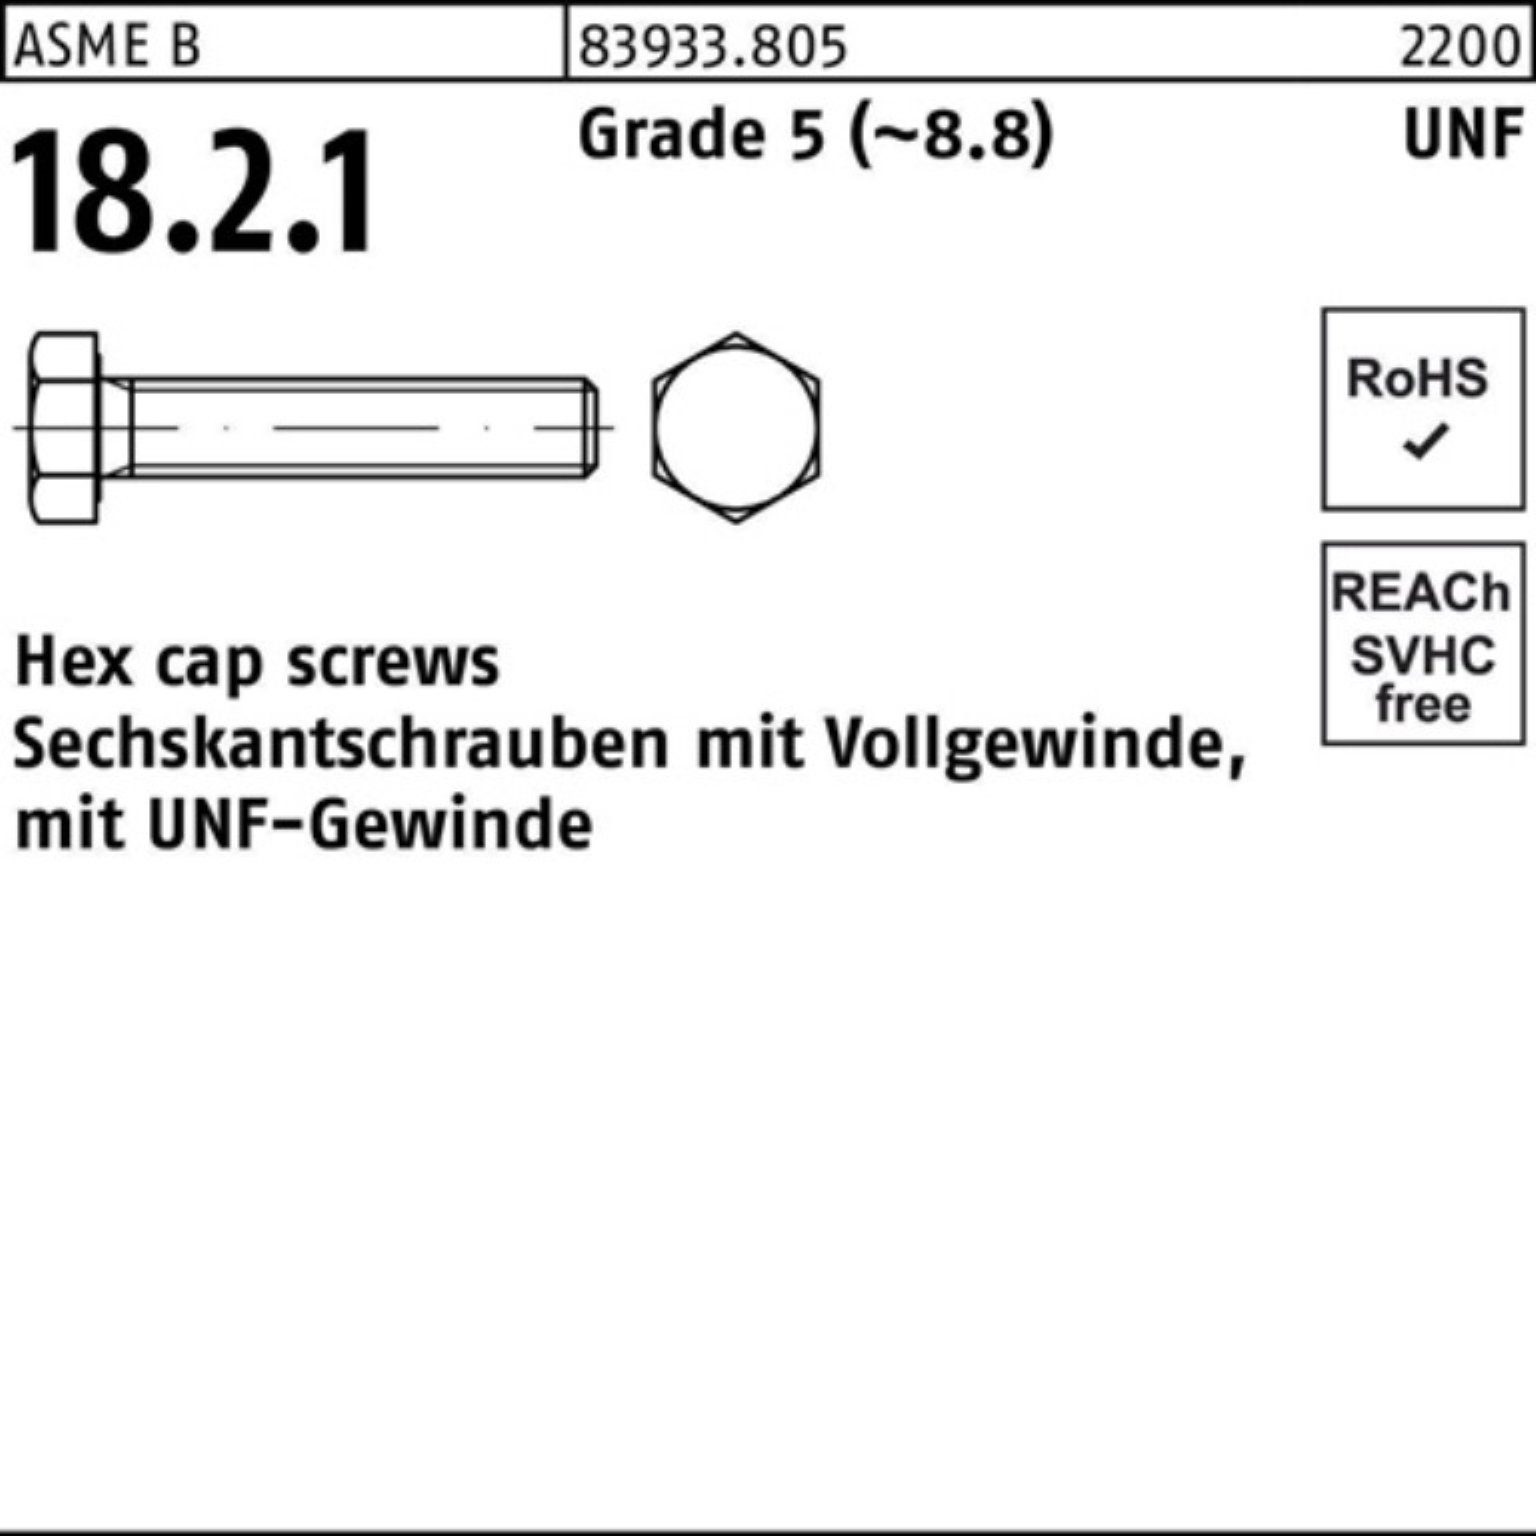 Reyher Sechskantschraube 100er Pack Sechskantschraube R 83933 UNF-Gewinde VG 5/16x 7/8 Grade 5